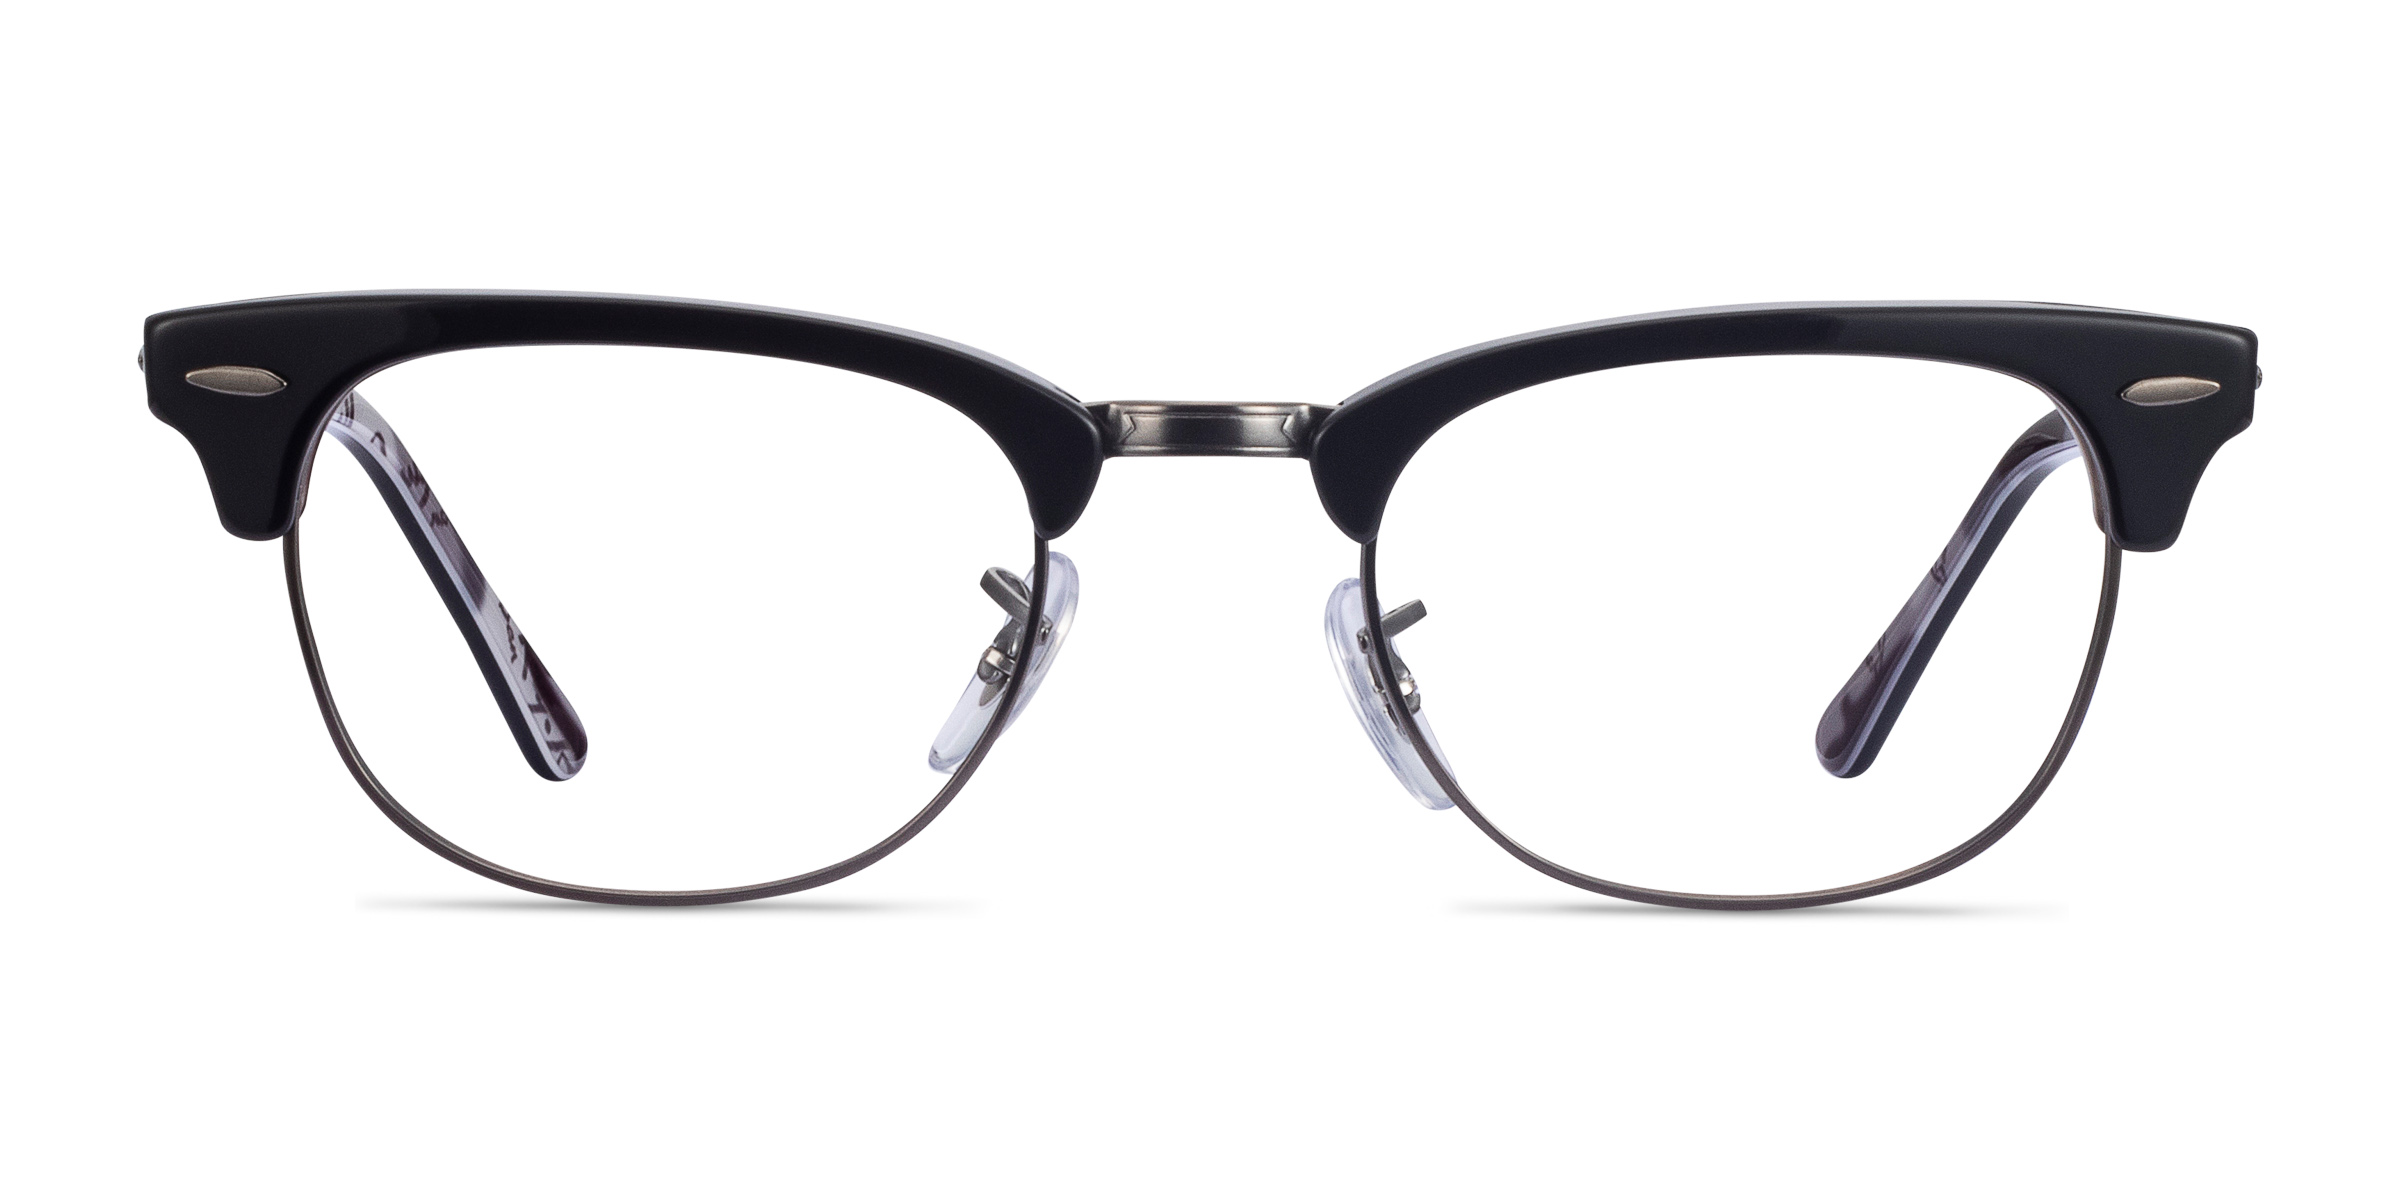 Ray-Ban RB5154 Clubmaster - Browline Black Multicolor Frame Eyeglasses ...